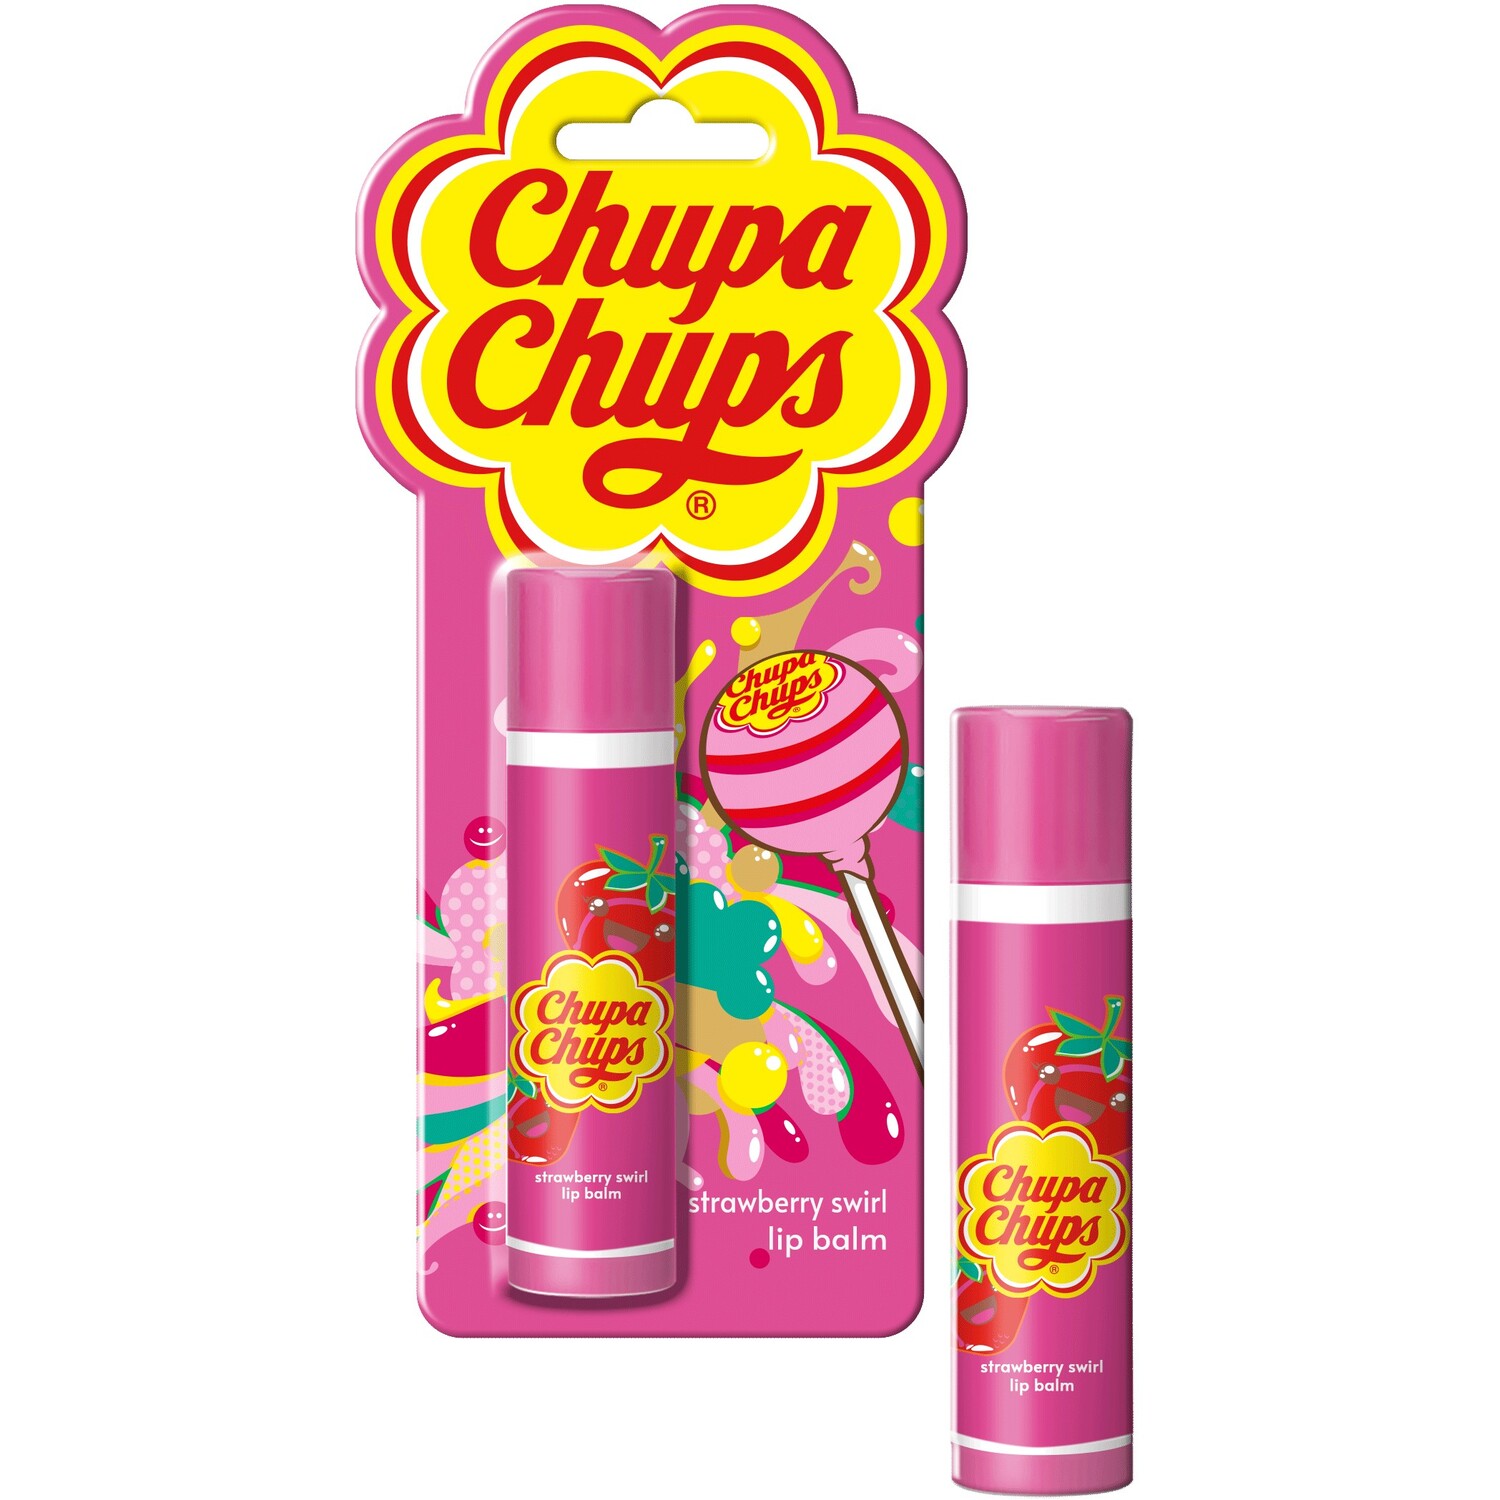 Chupa Chups Lip Balm - Strawberry Swirl Image